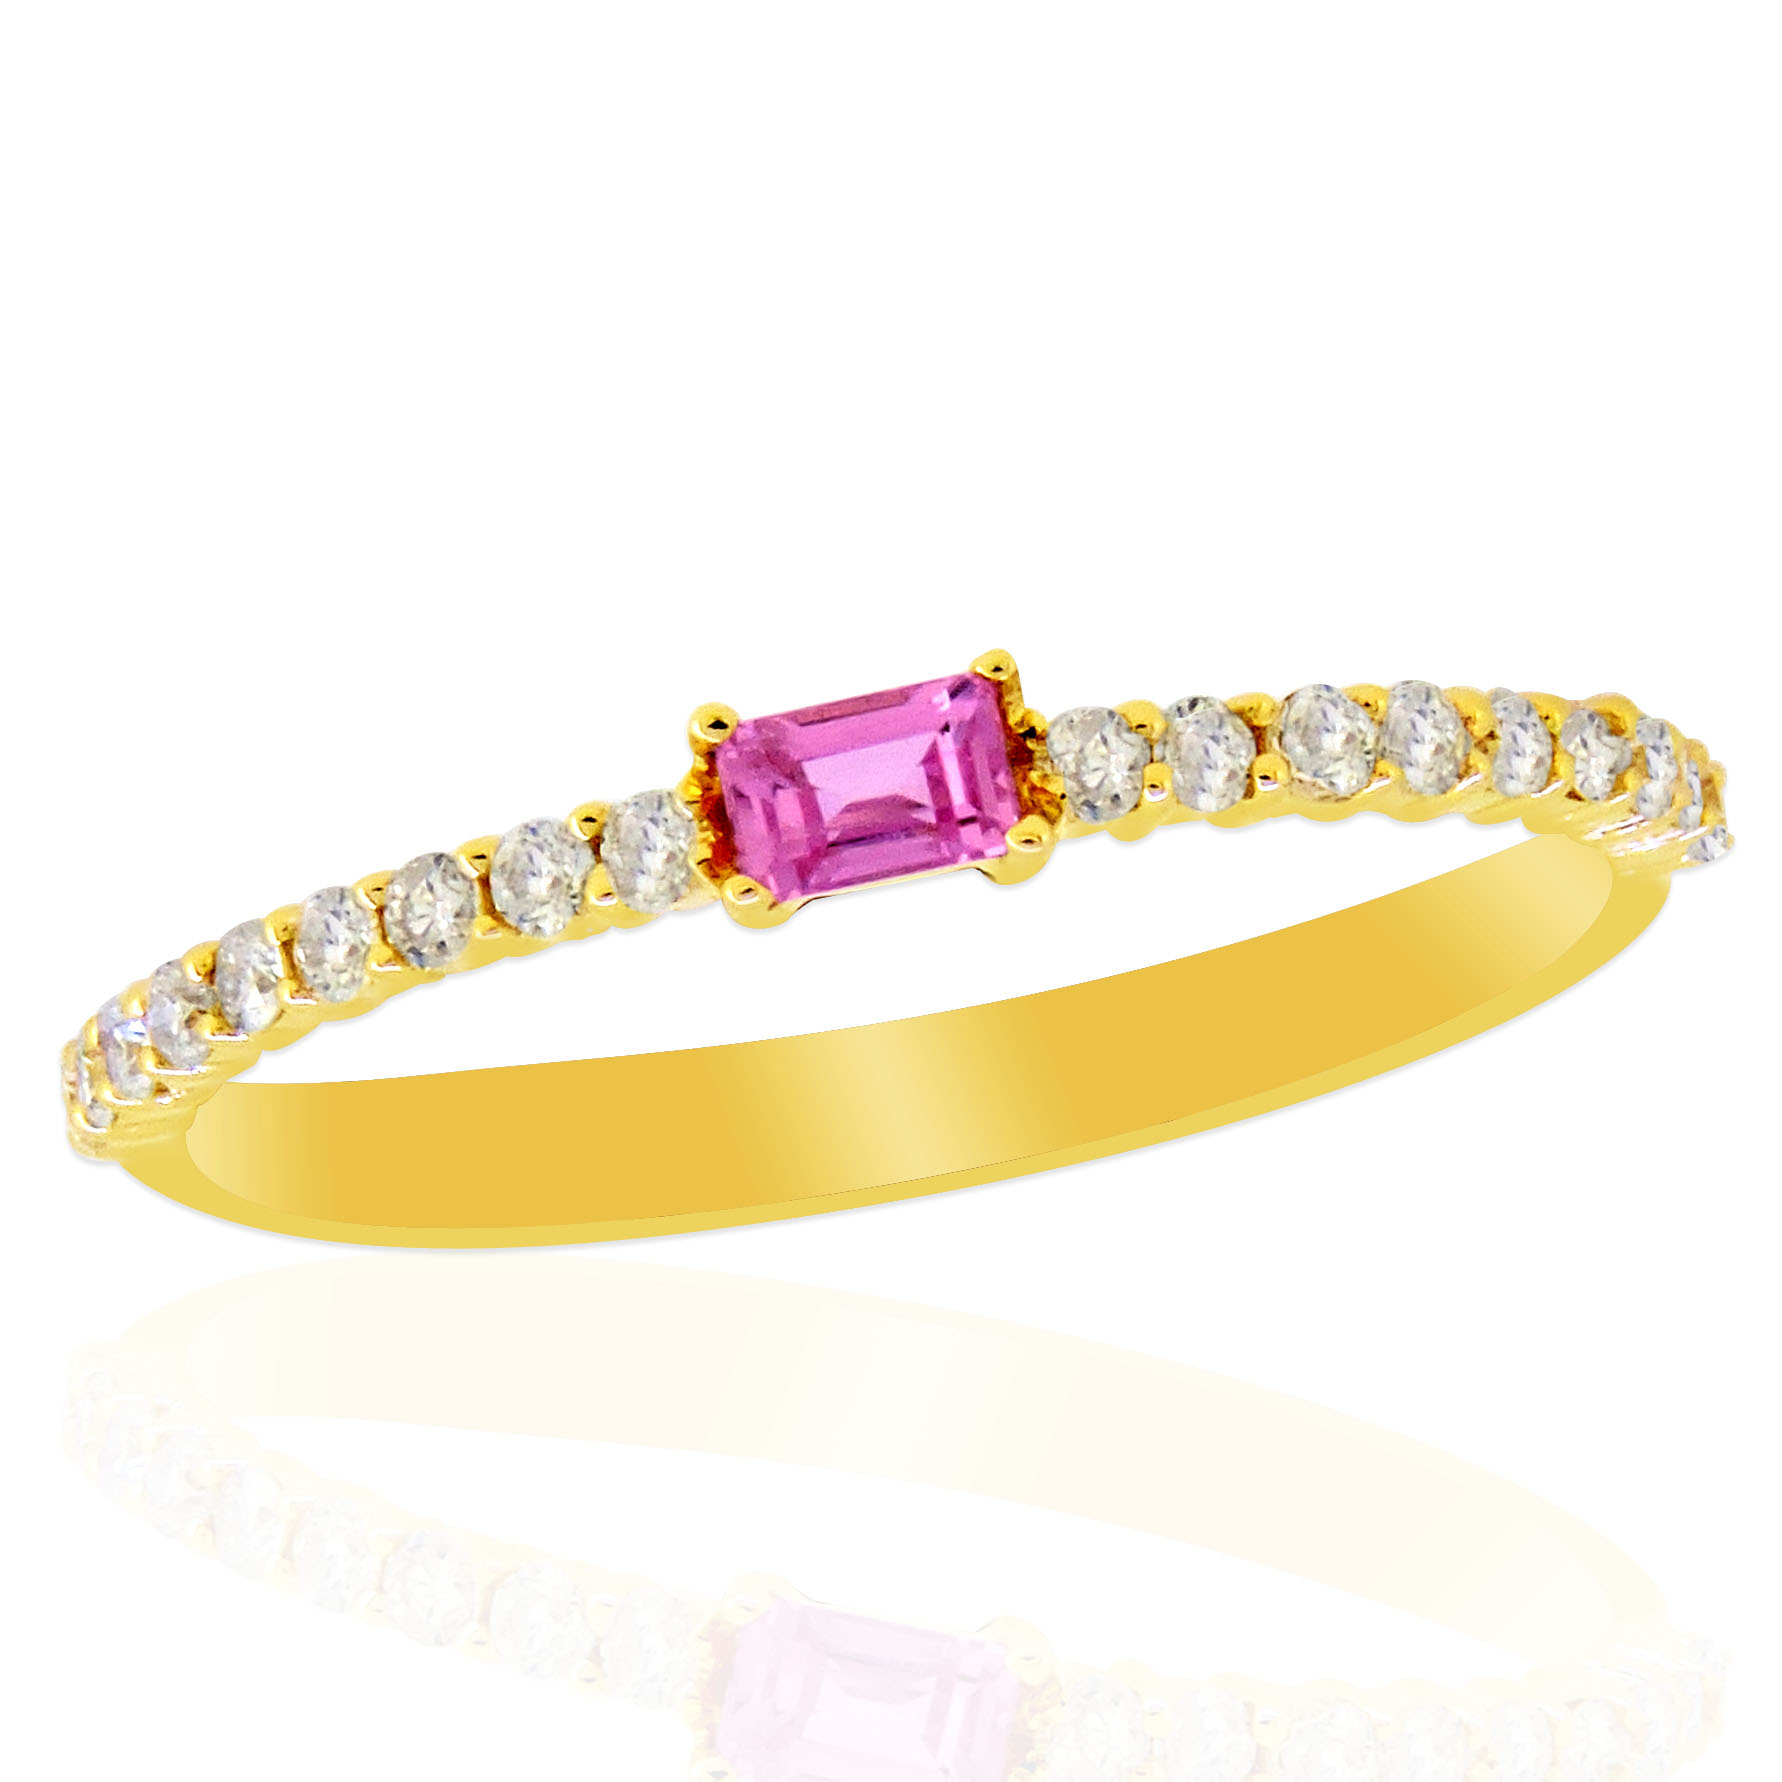 Lali 14 karat yellow gold diamond and pink sapphire ring